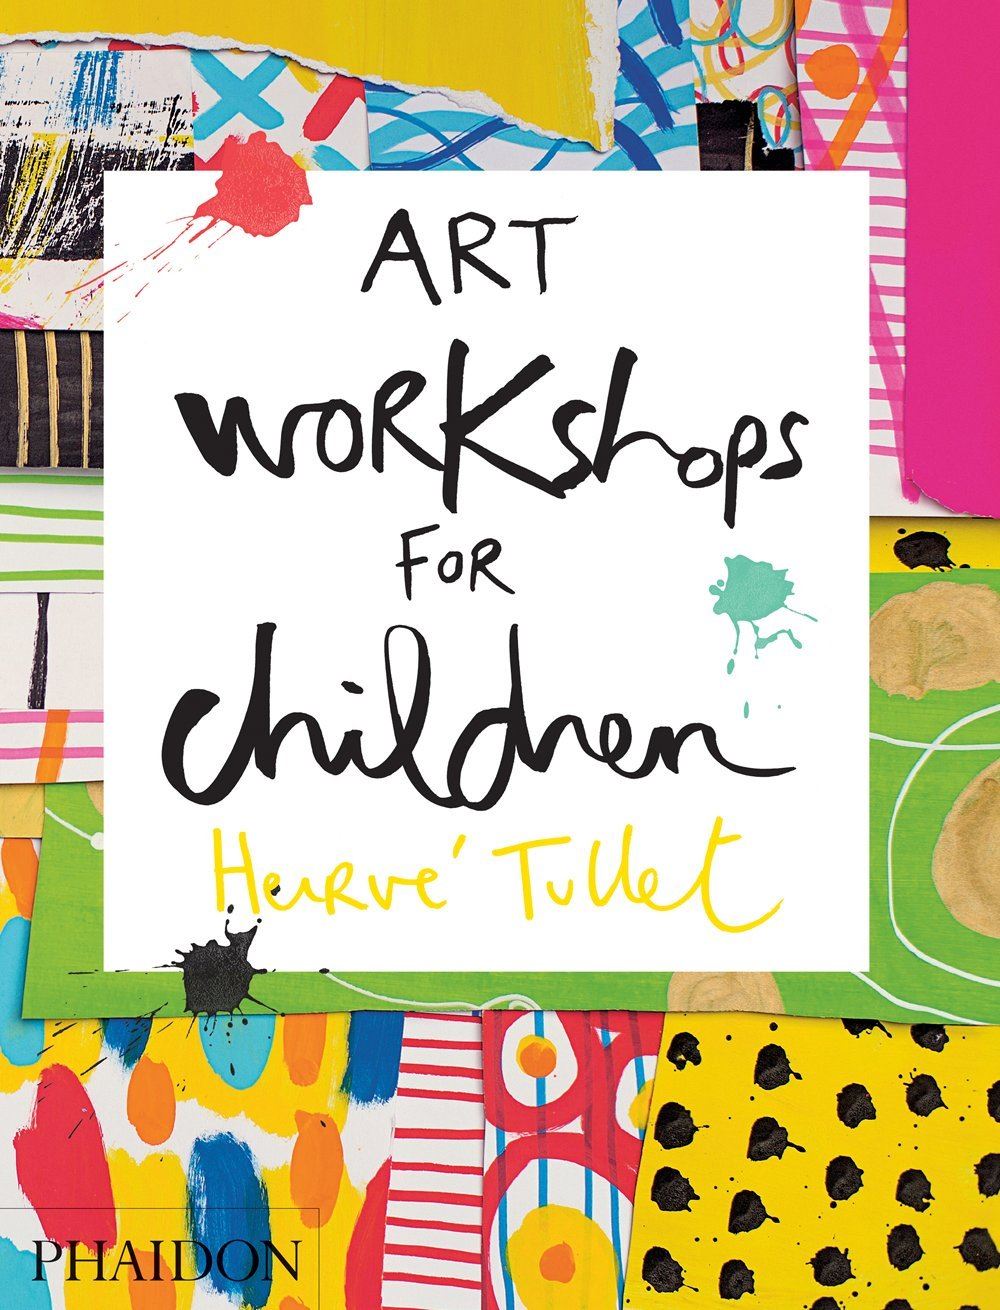 an art book with activities for children